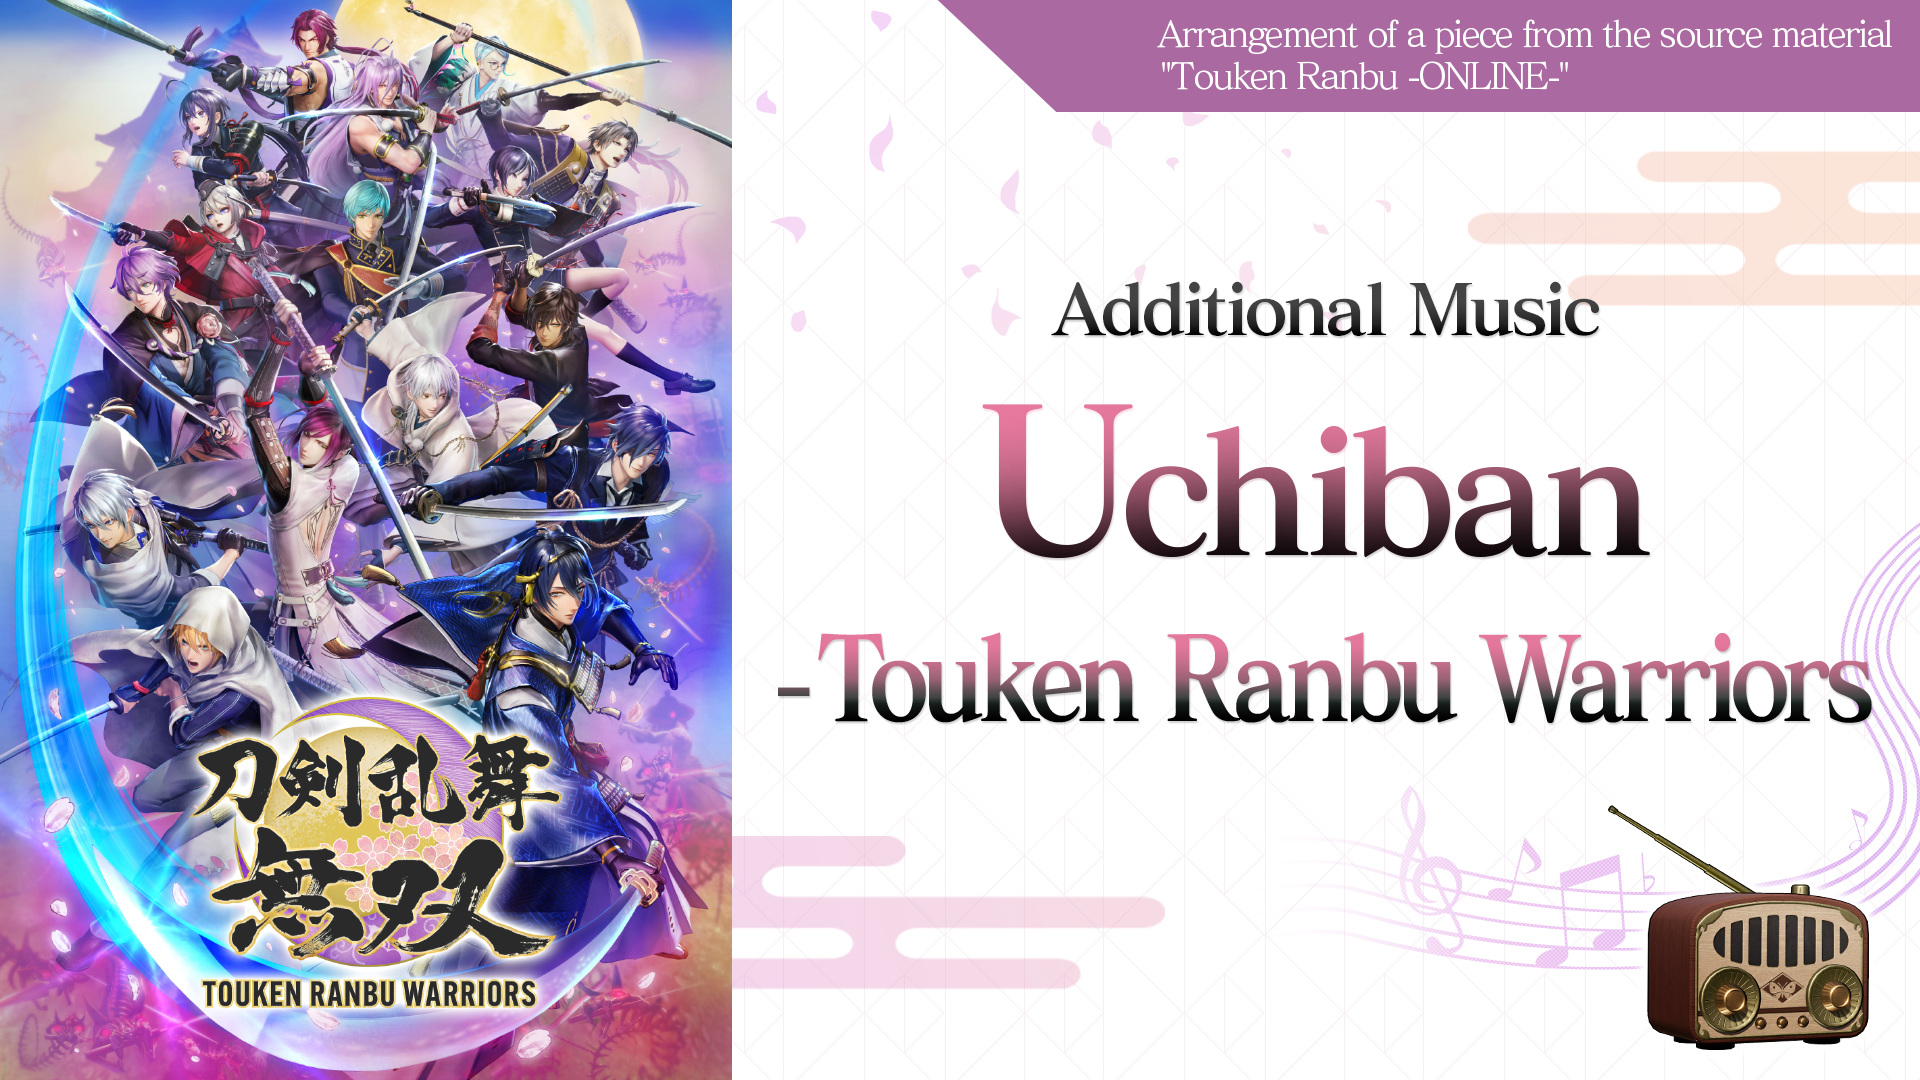 Additional Music "Uchiban - Touken Ranbu Warriors"